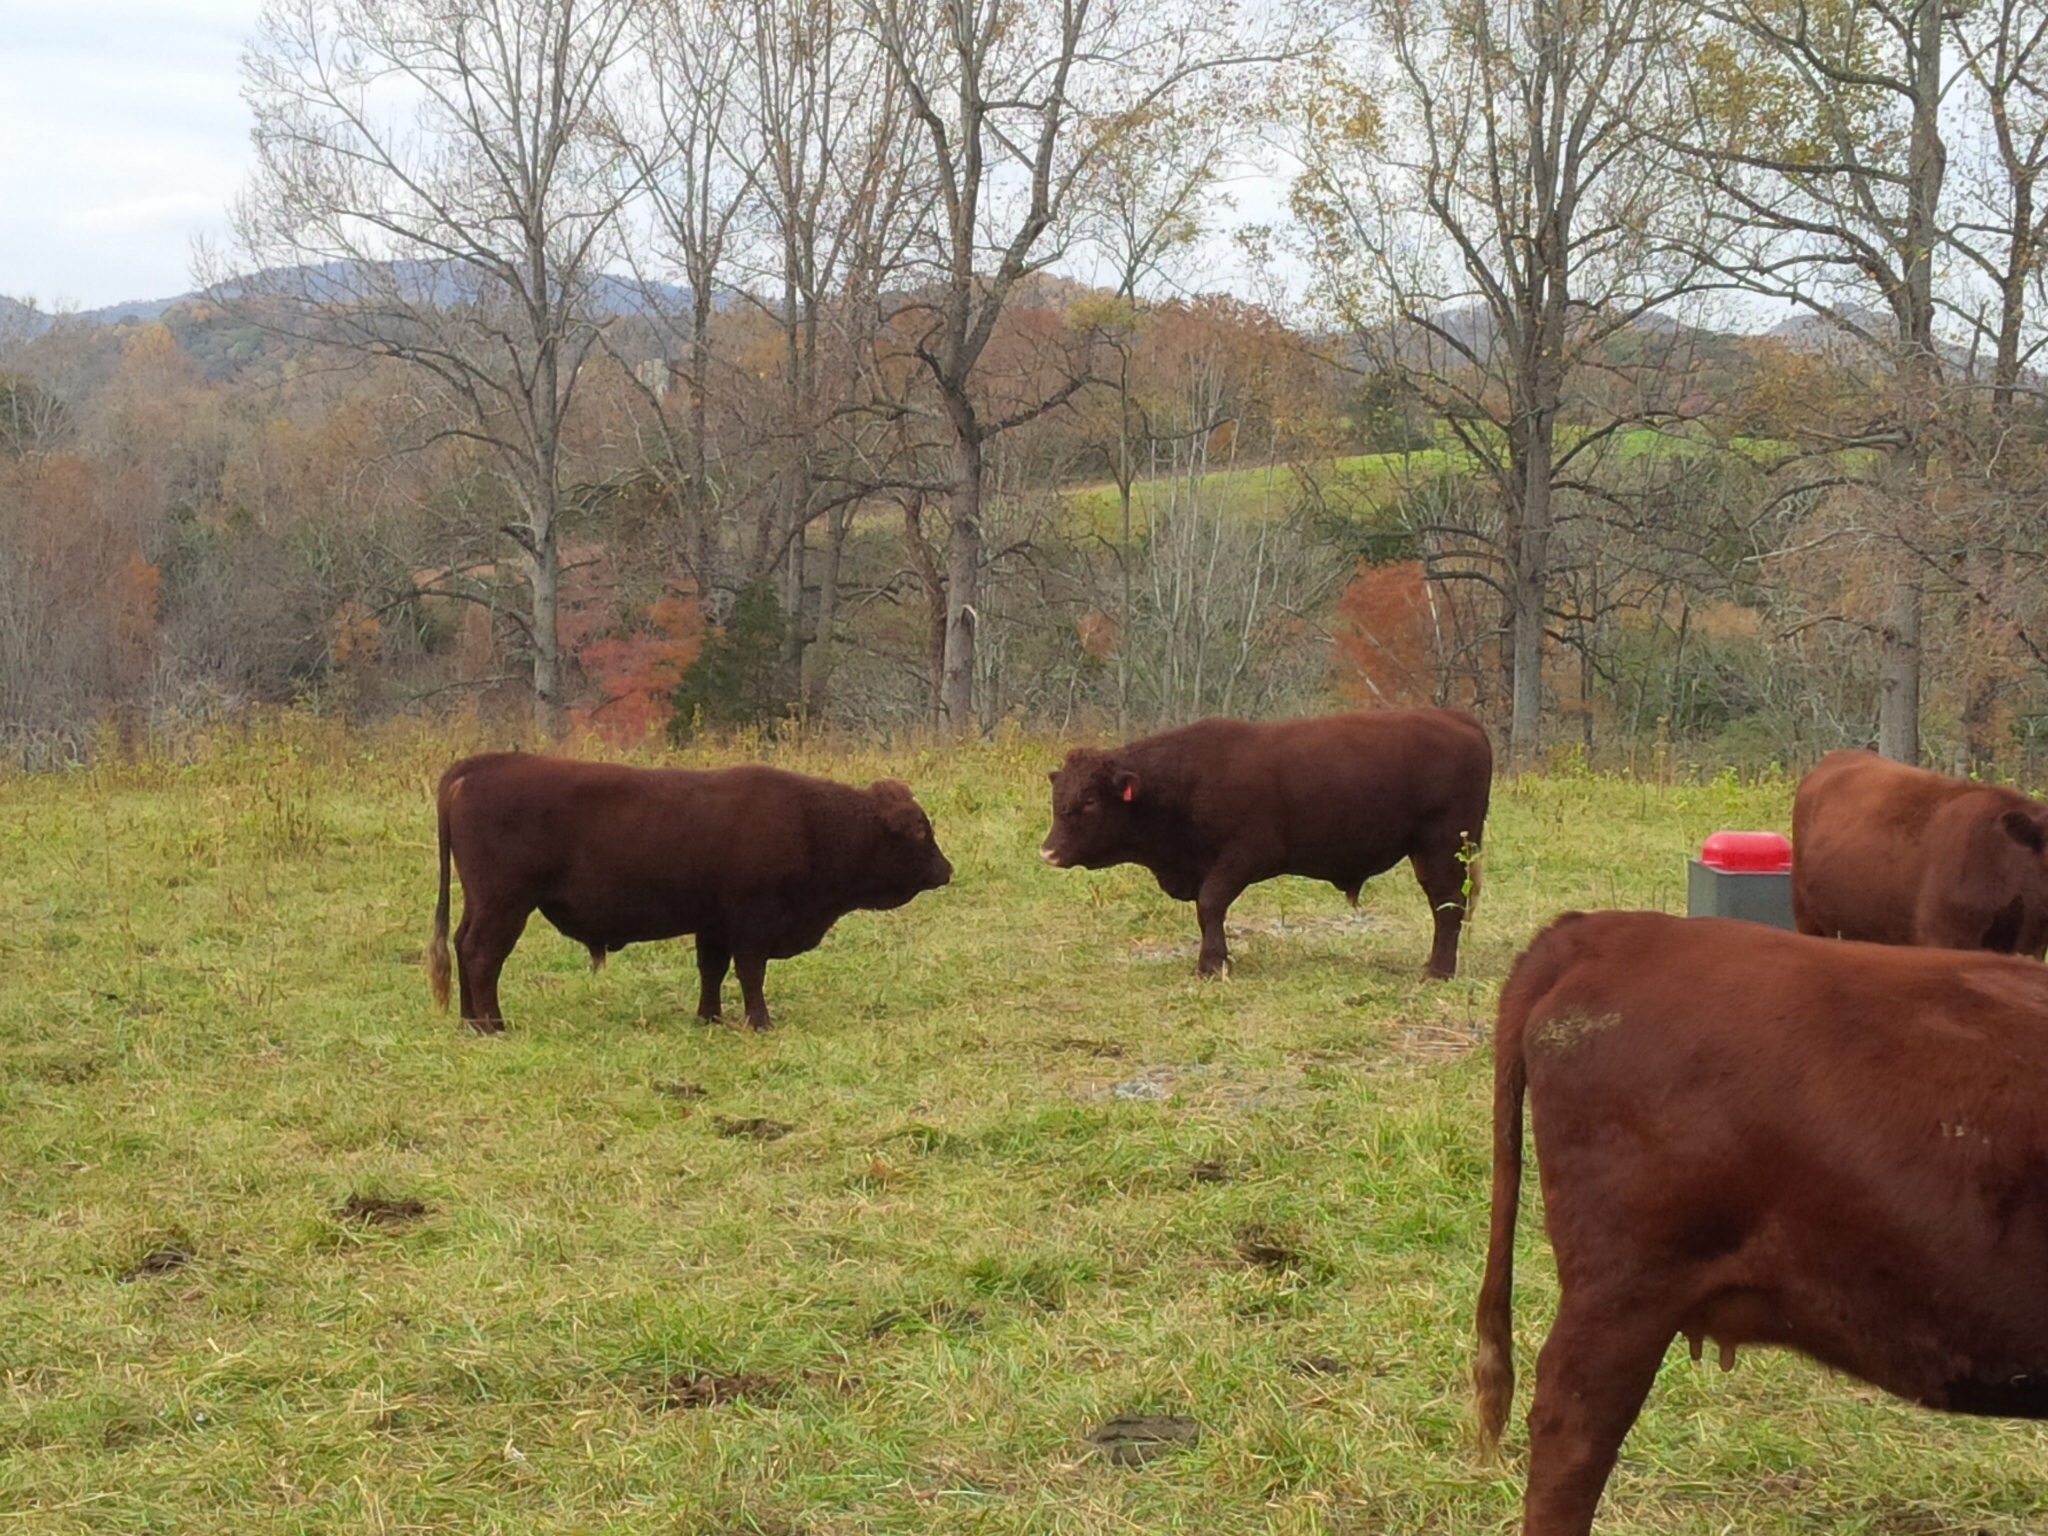 Ivy Croft - All Natural Angus Cow Calf Farm Forest, Virginia